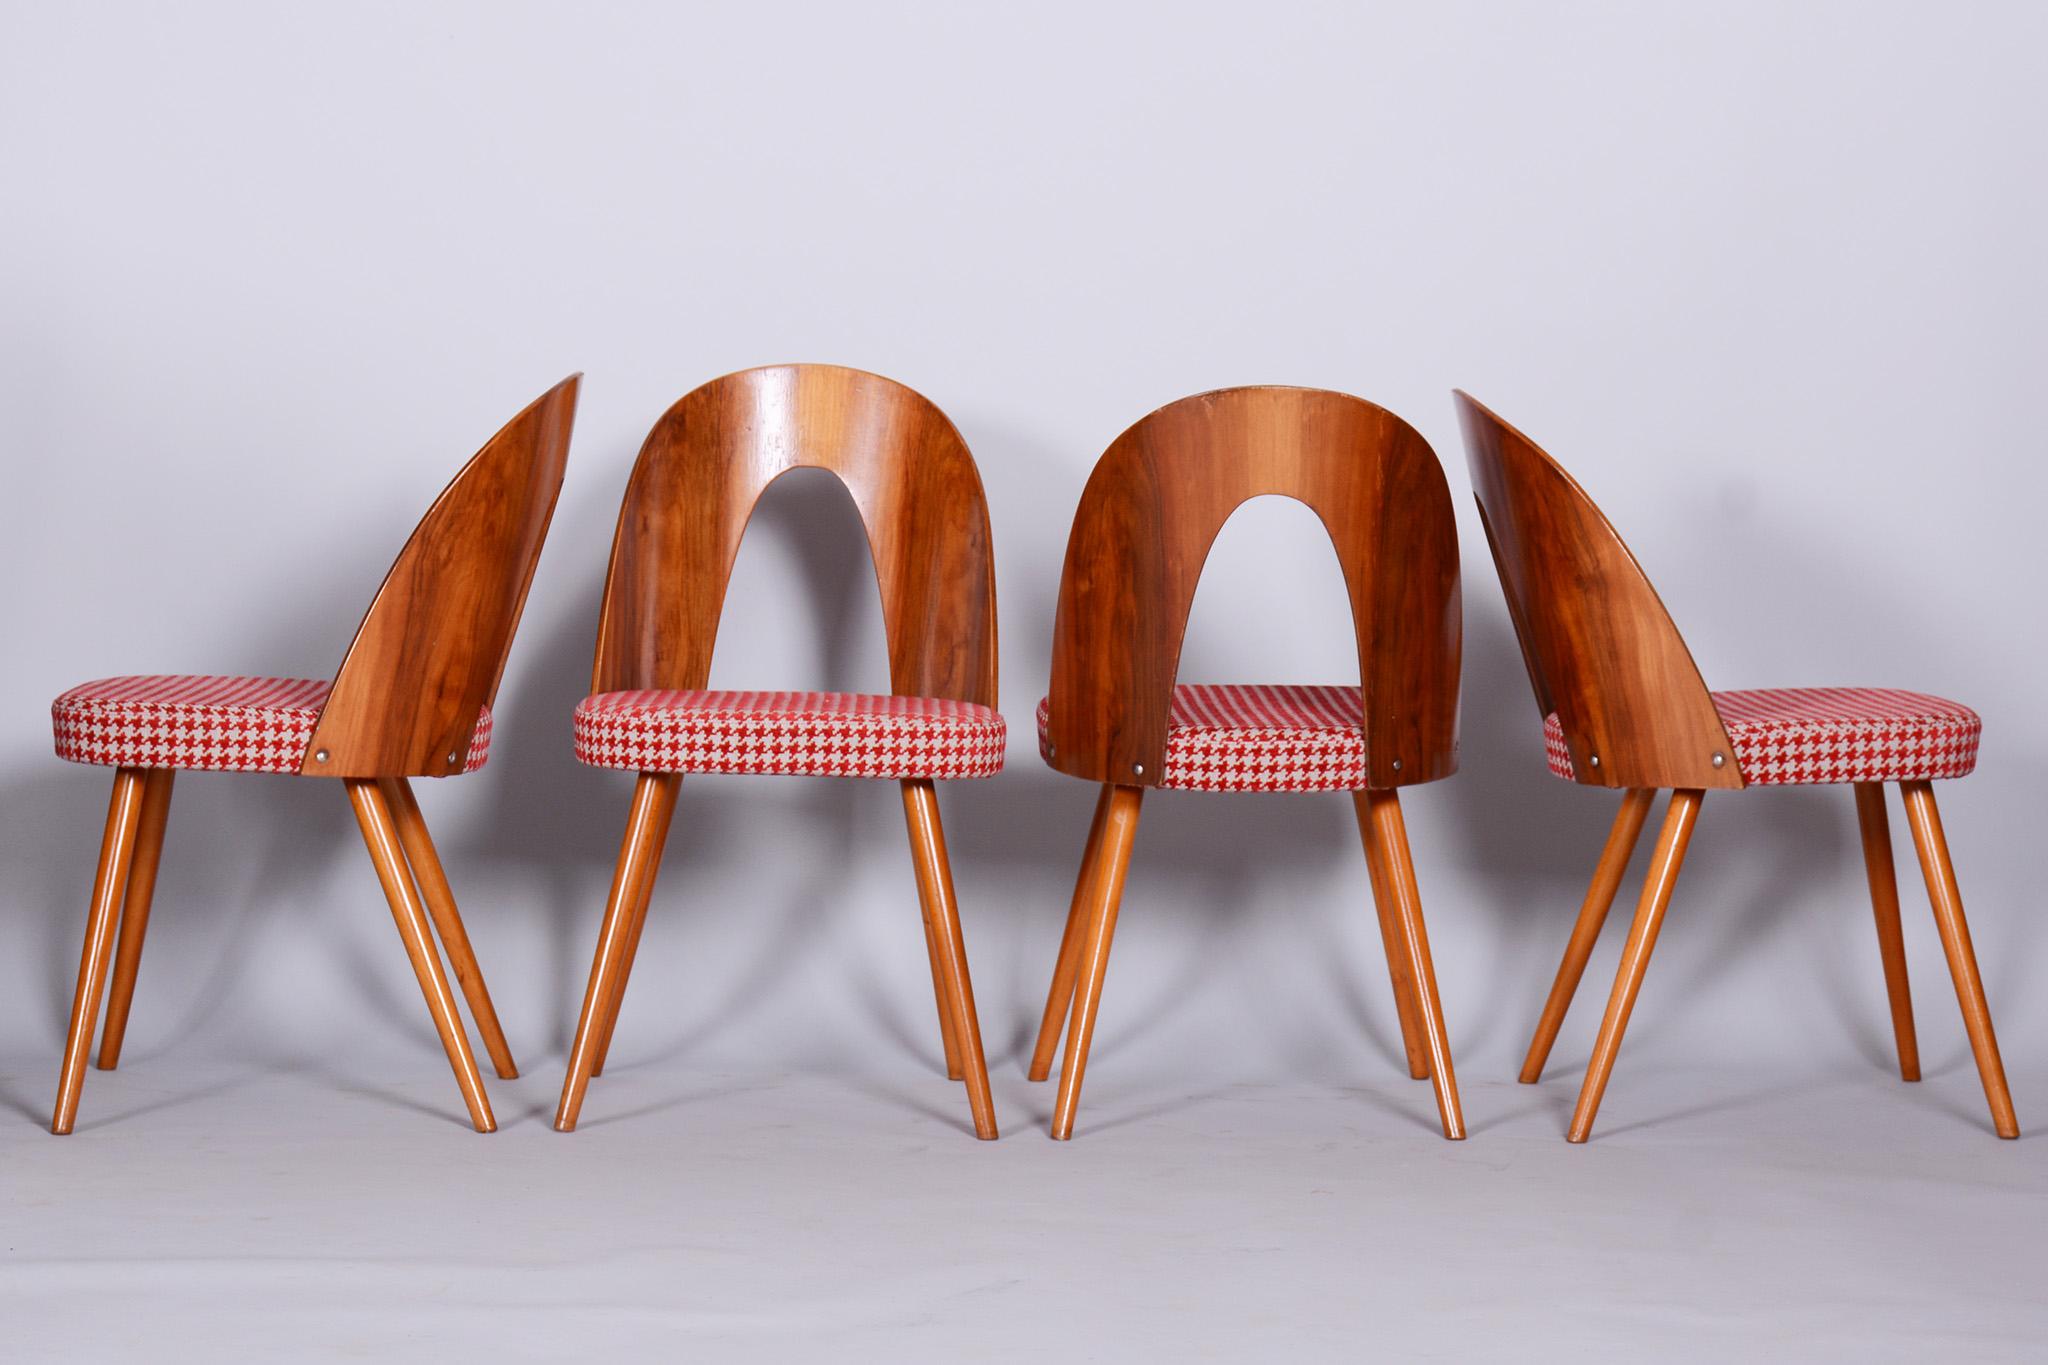 Four Restored Midcentury Chairs, Antonin Suman, Beech, Walnut, Czechia, 1950s For Sale 4